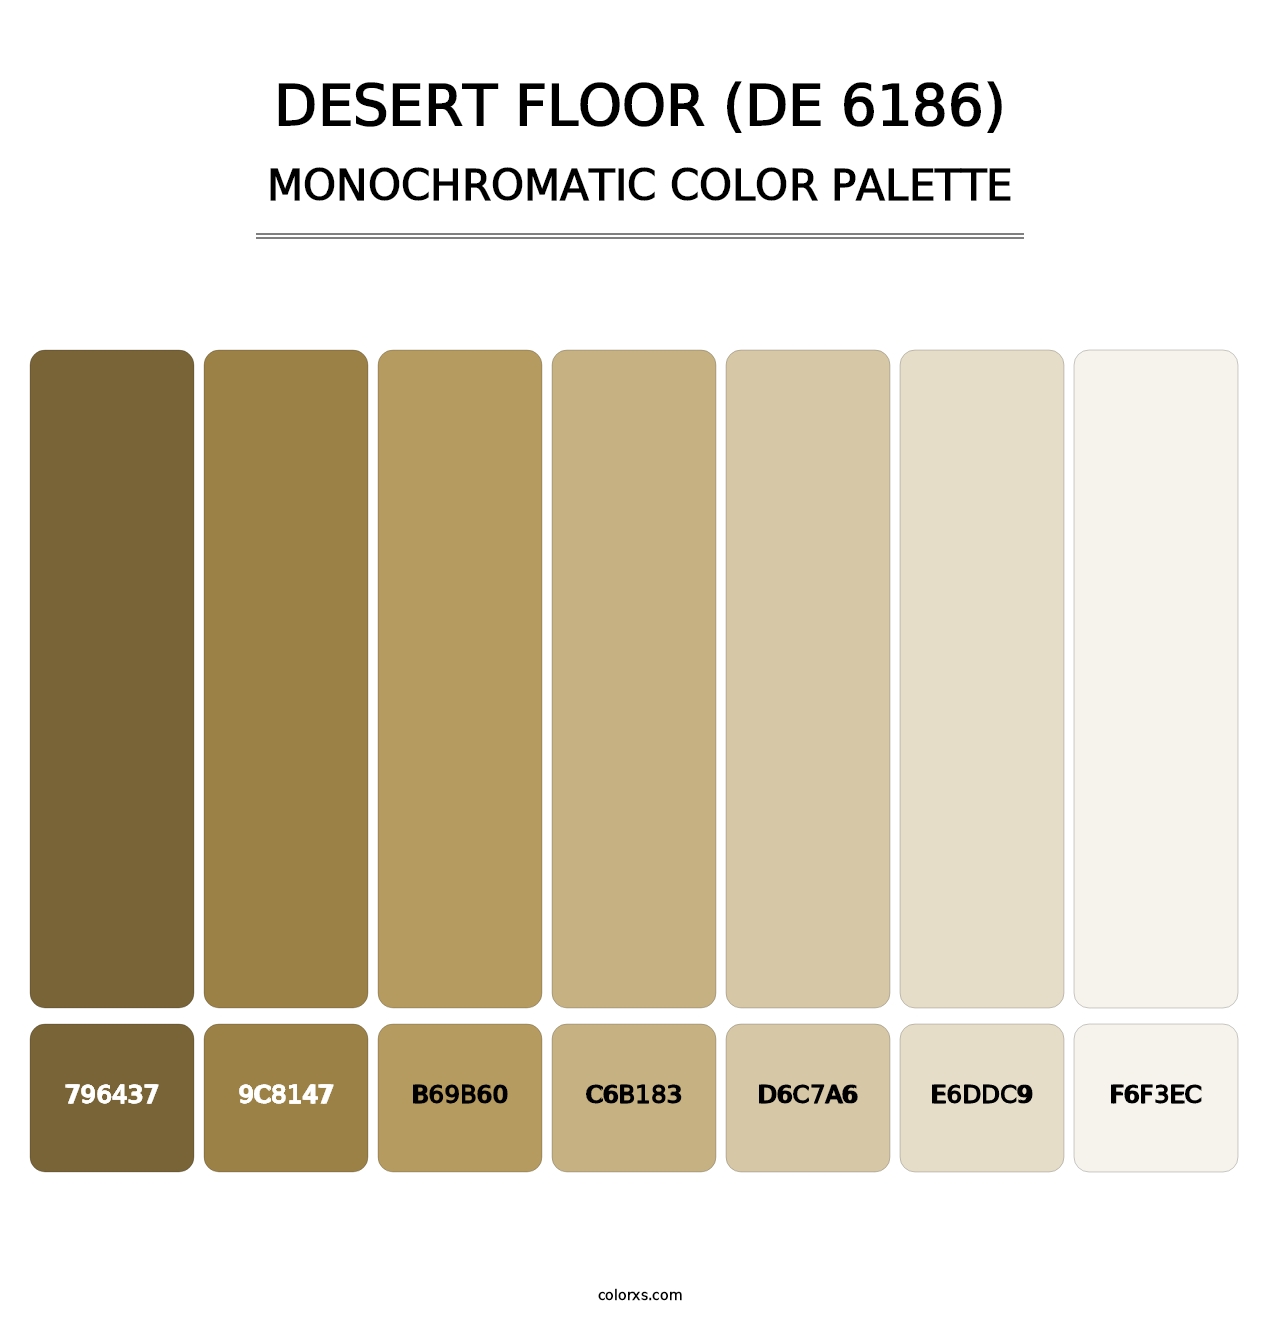 Desert Floor (DE 6186) - Monochromatic Color Palette